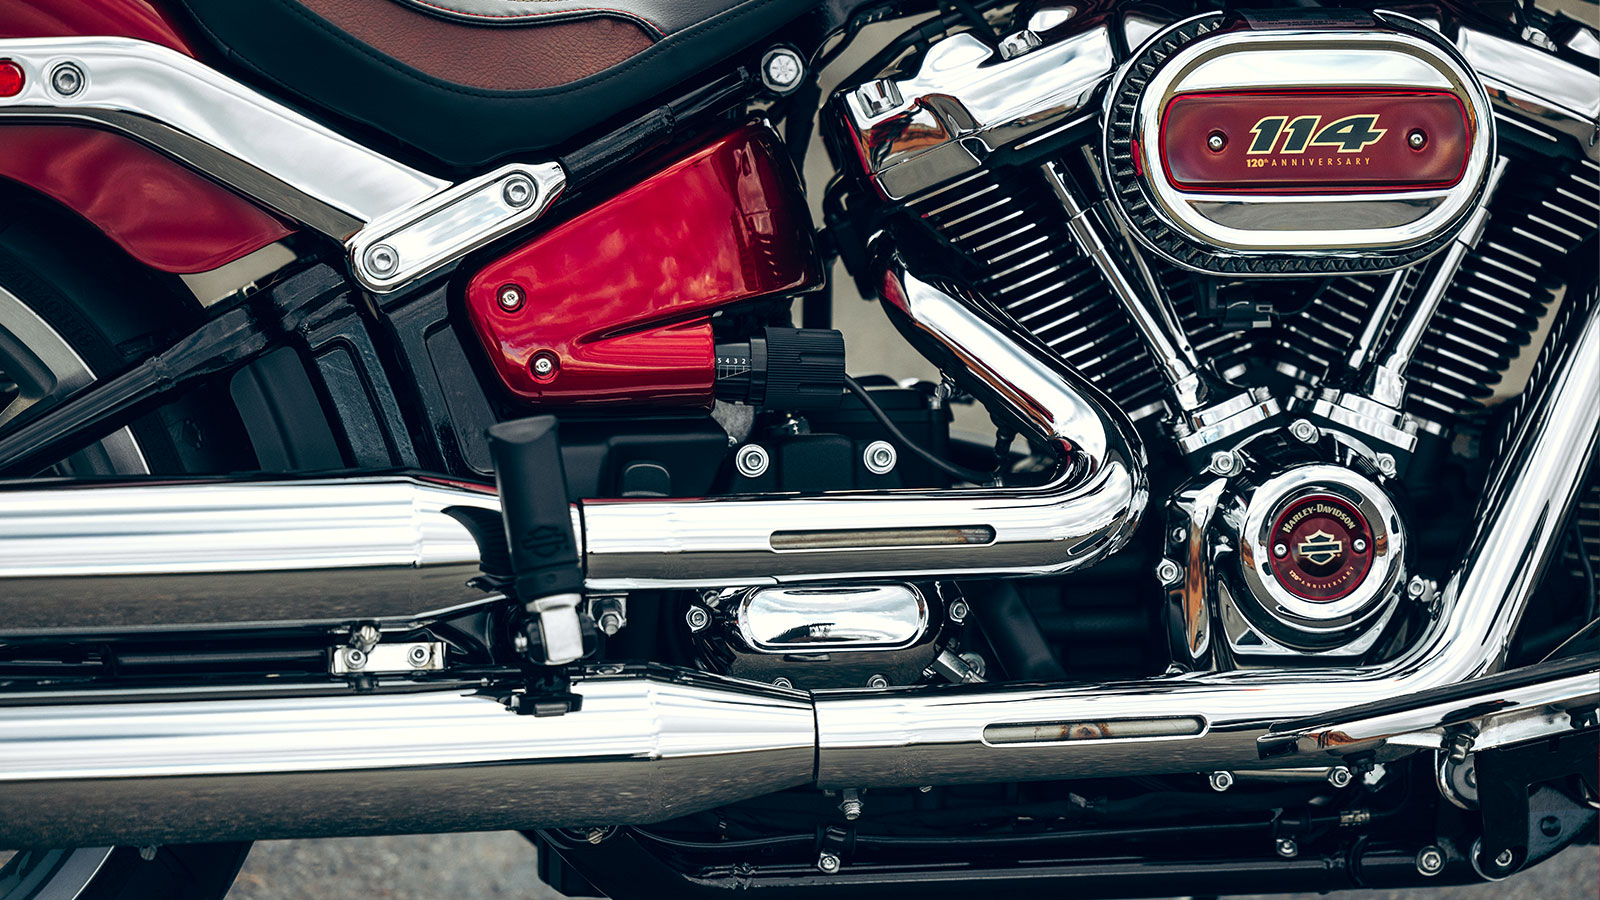 Harley-Davidson's 120th Anniversary | Harley-Davidson USA